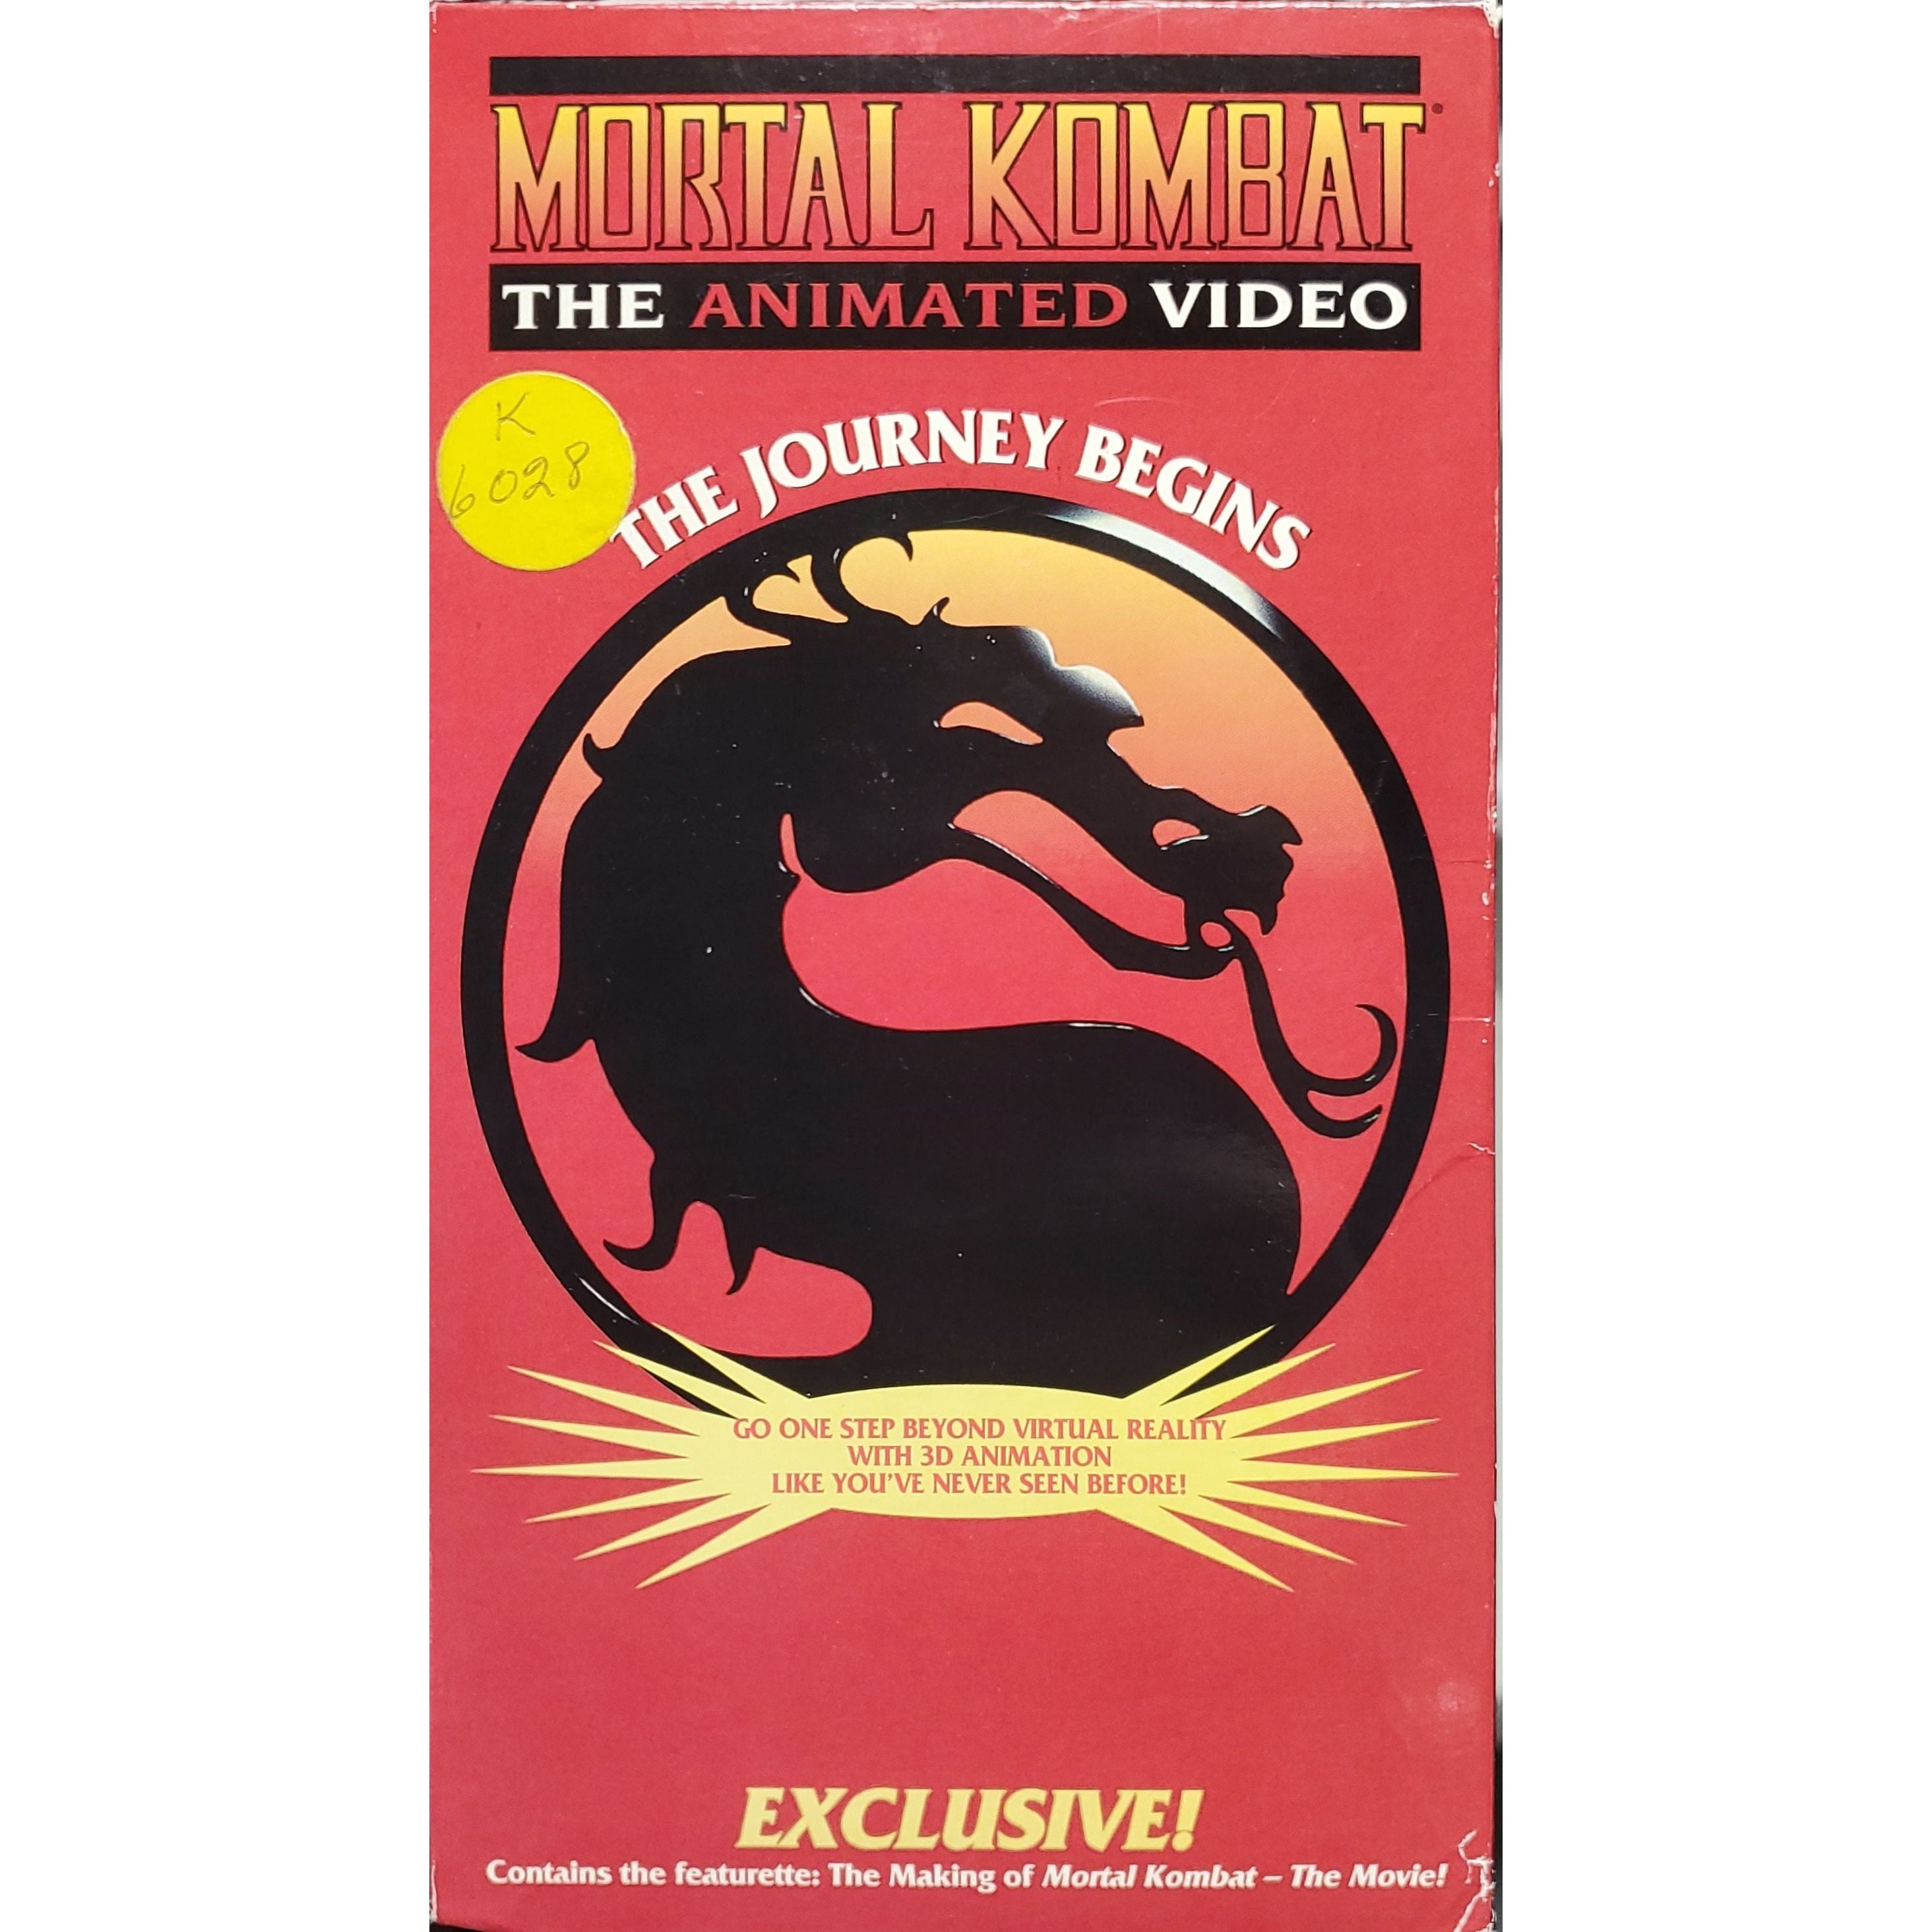 Mortal Kombat The Animated Video VHS Tape